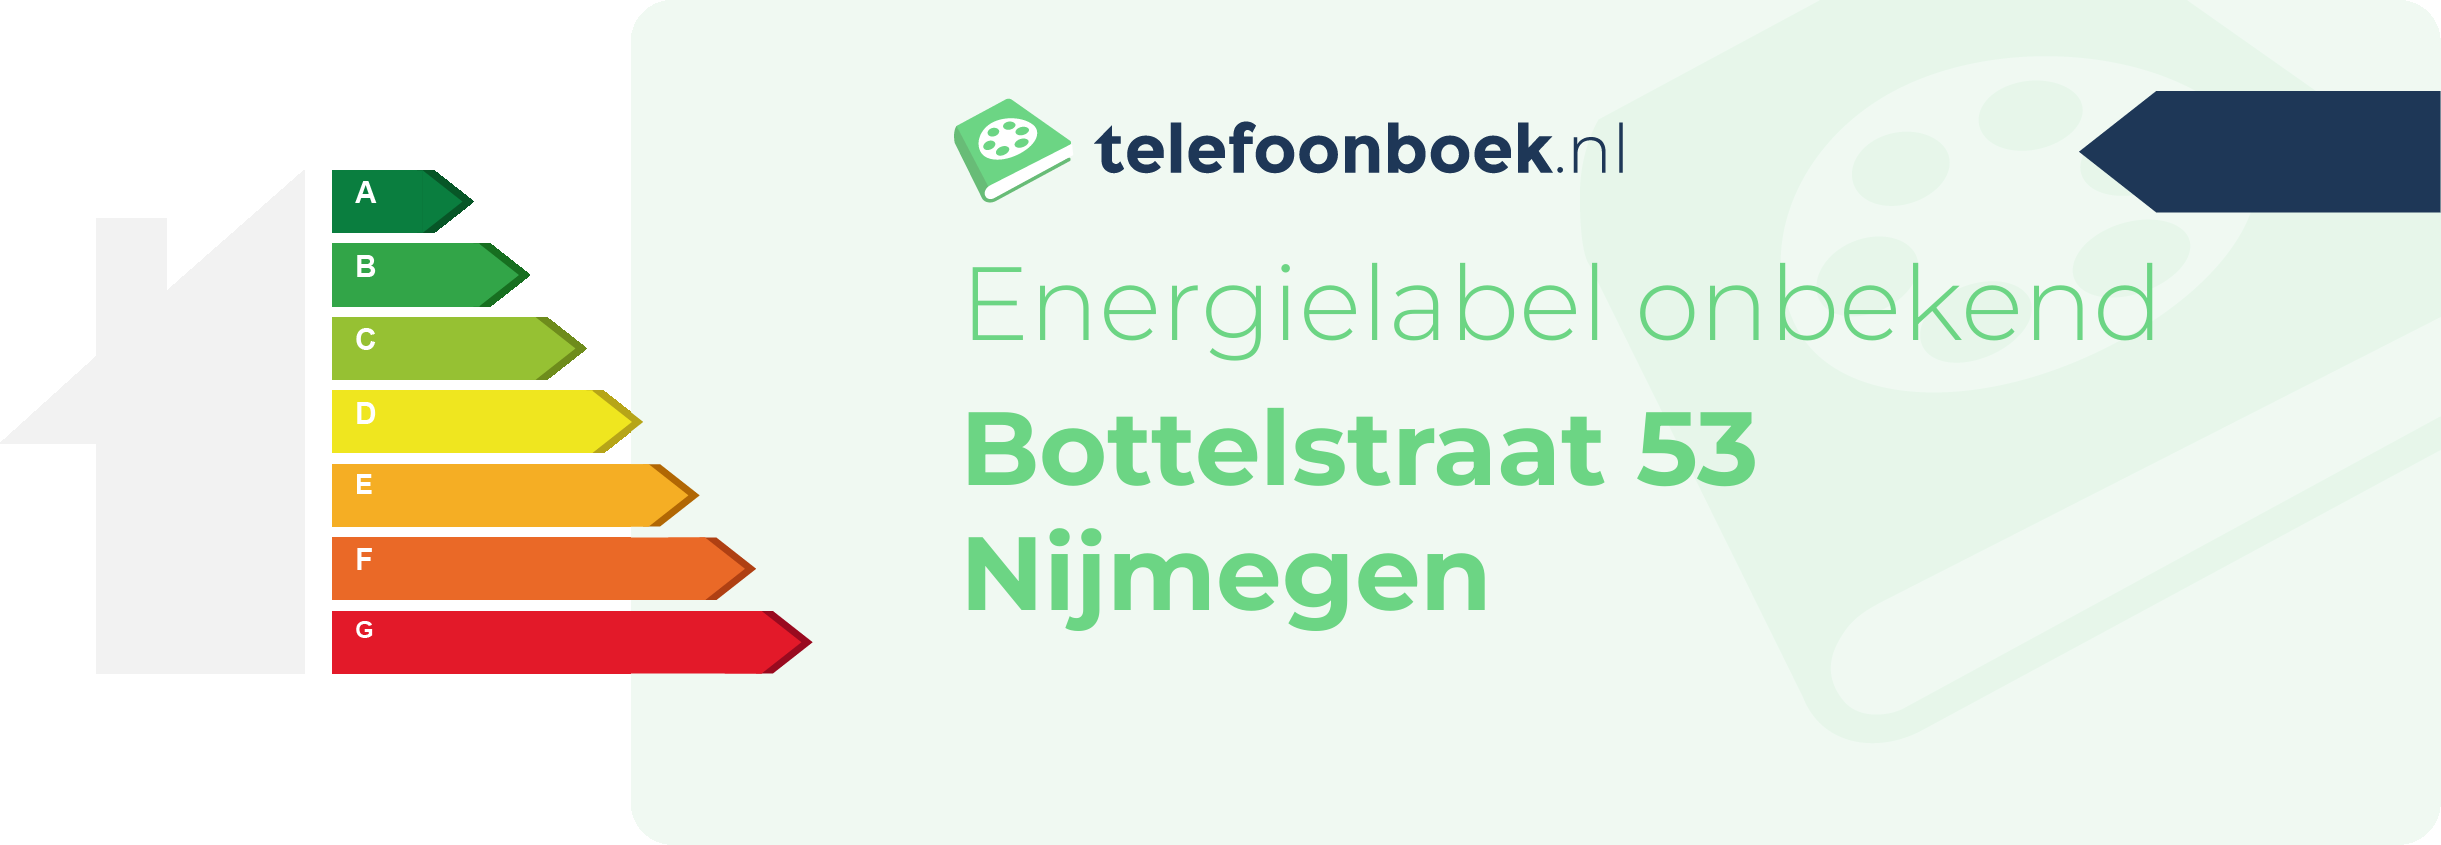 Energielabel Bottelstraat 53 Nijmegen